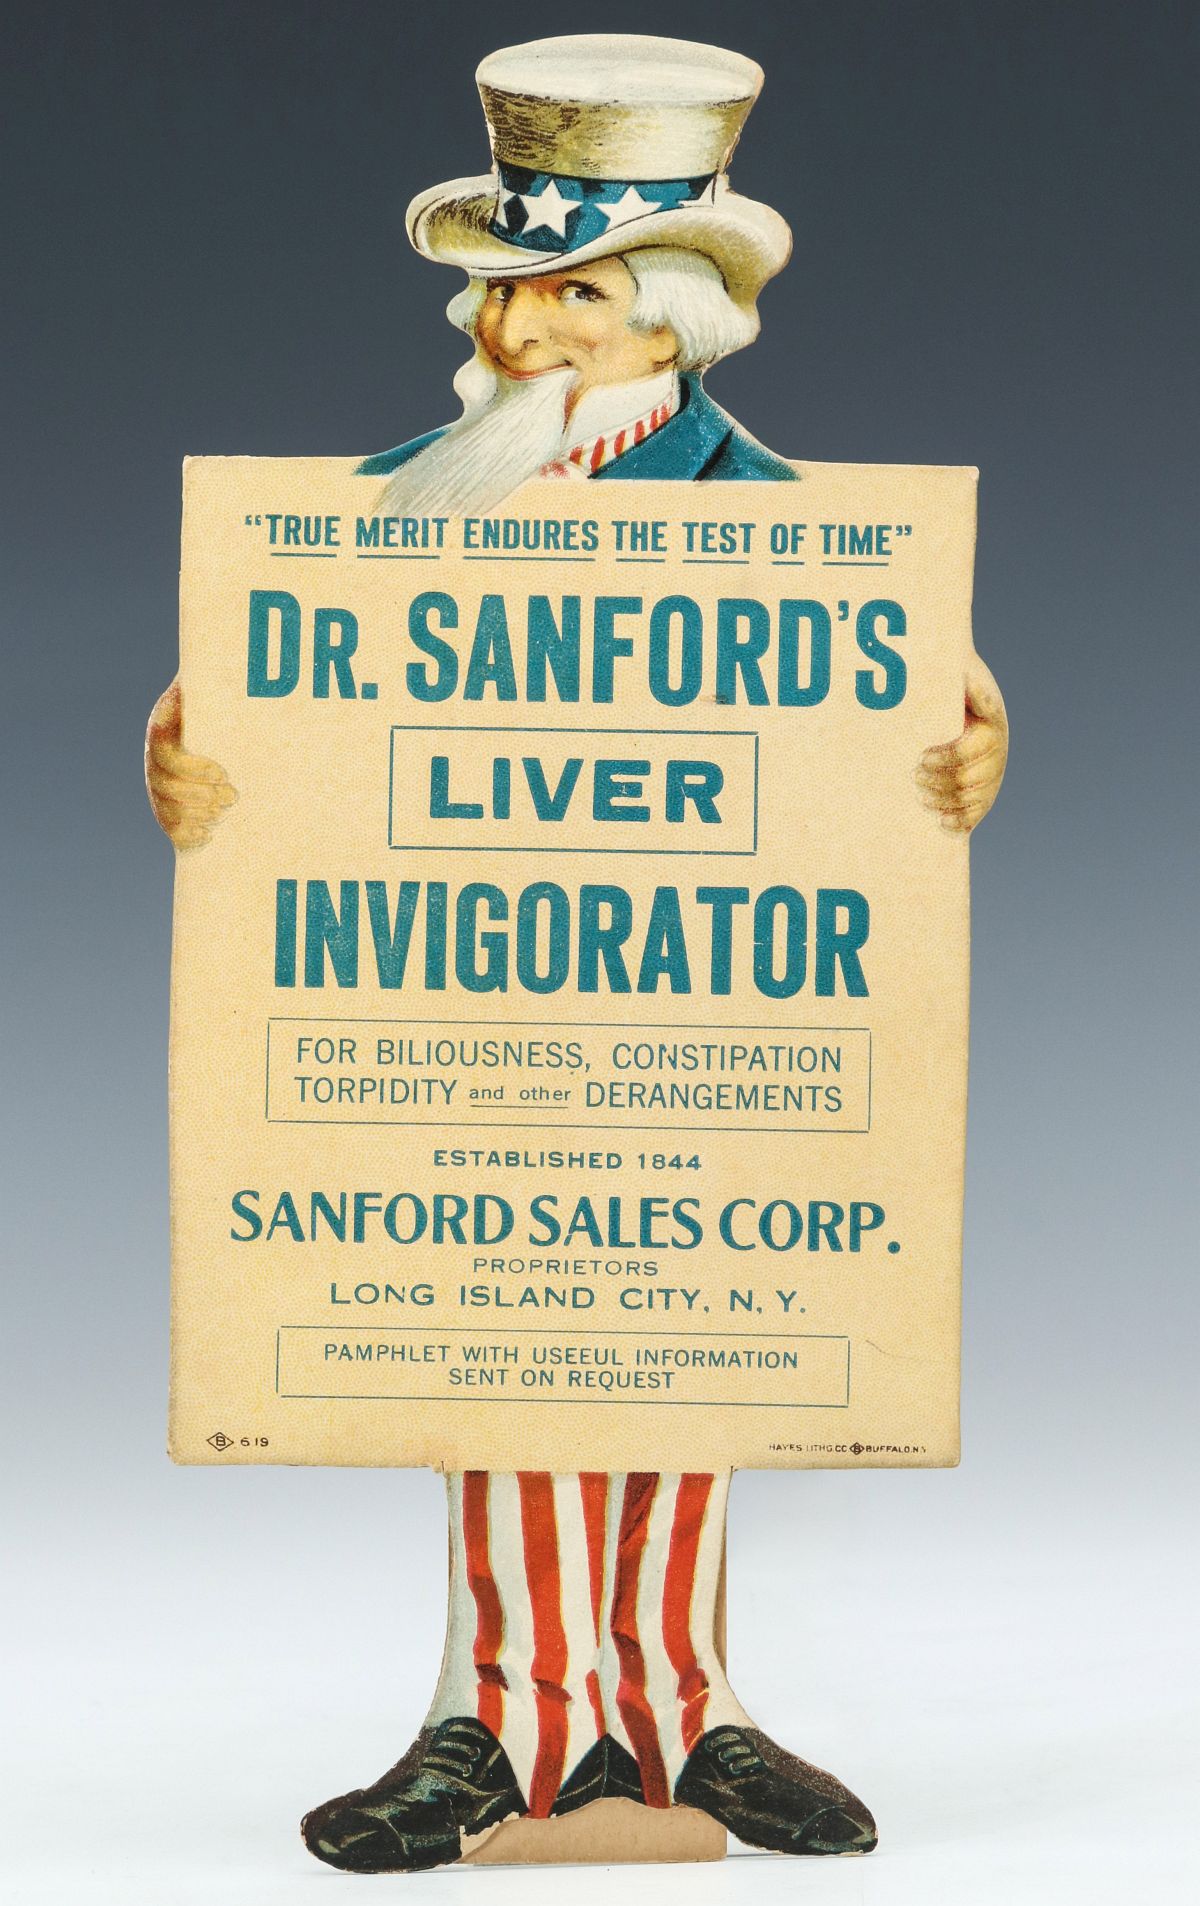 A DR. SANFORD'S LIVER INVIGORATOR DIE-CUT SIGN